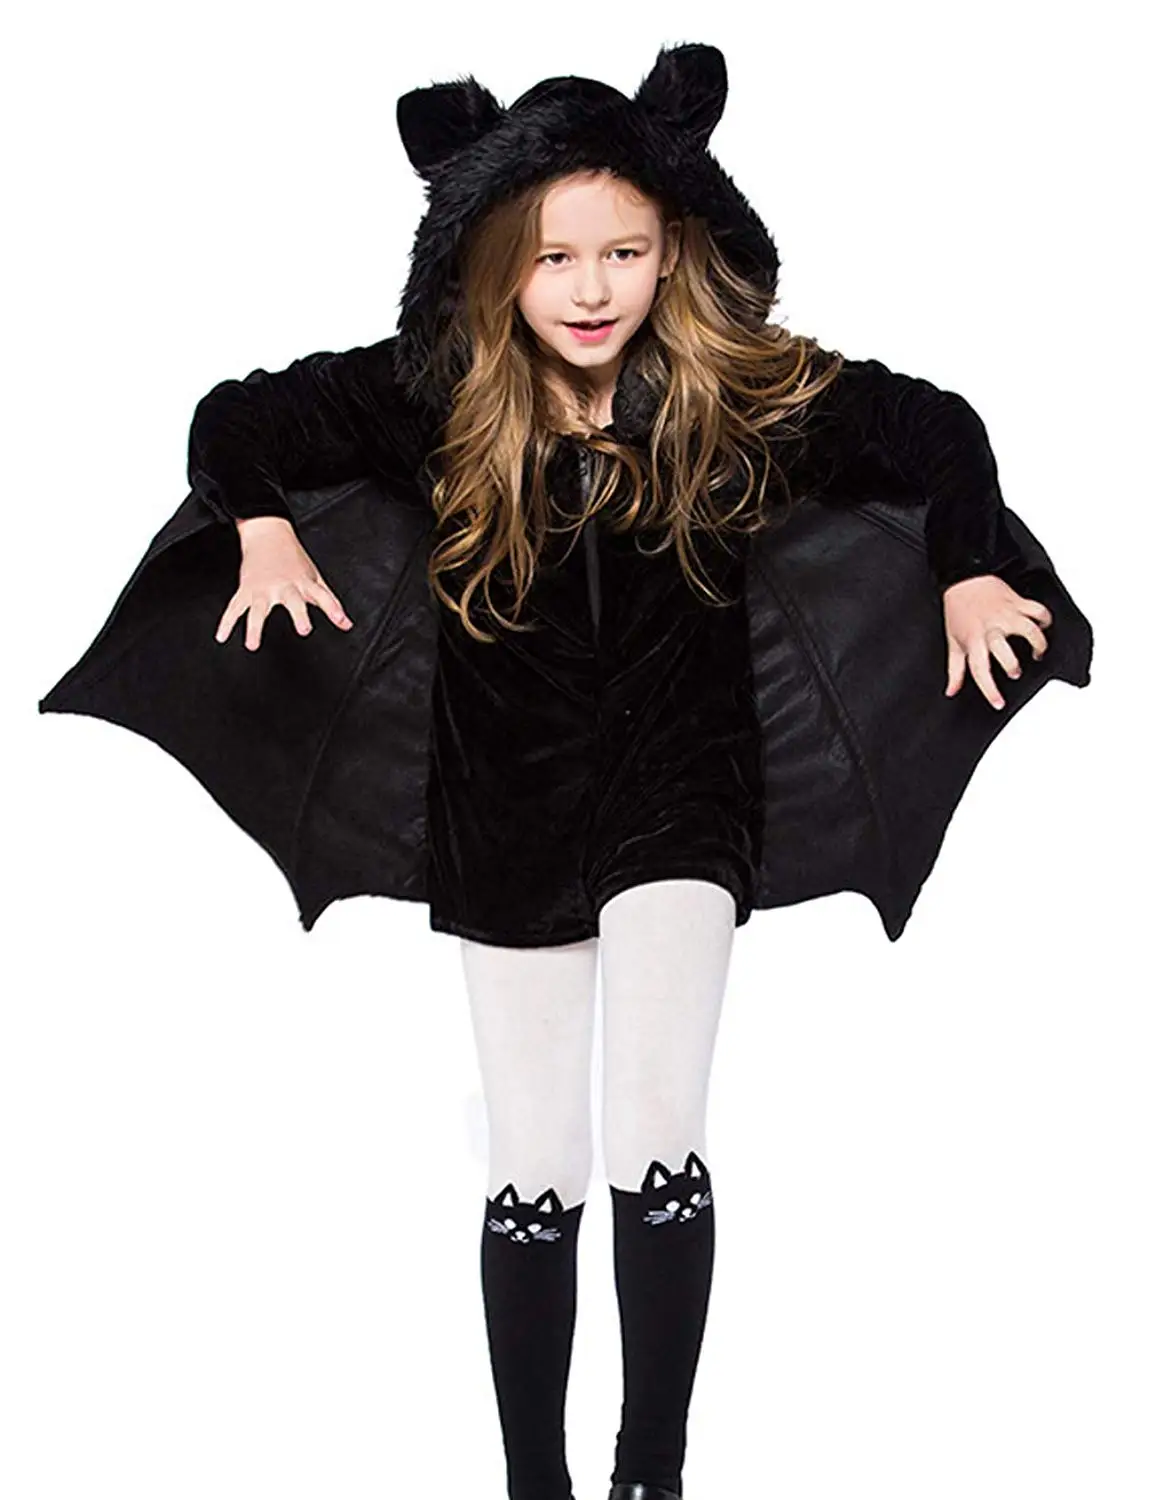 Cheap Bat Costume Kids, find Bat Costume Kids deals on line at Alibaba.com